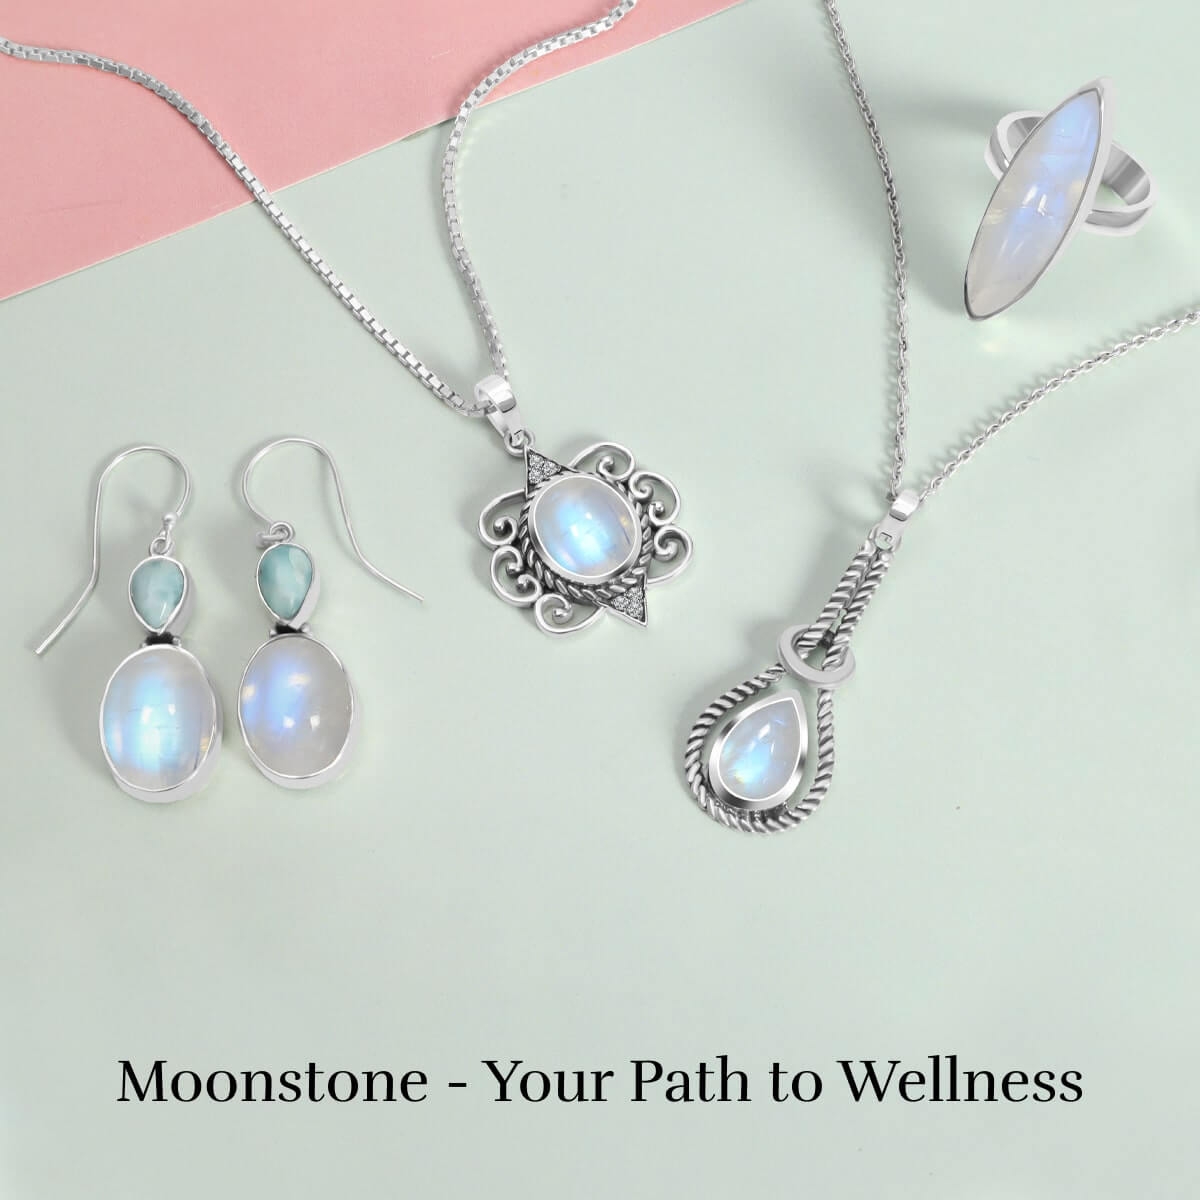 Benefits of wearing moonstone